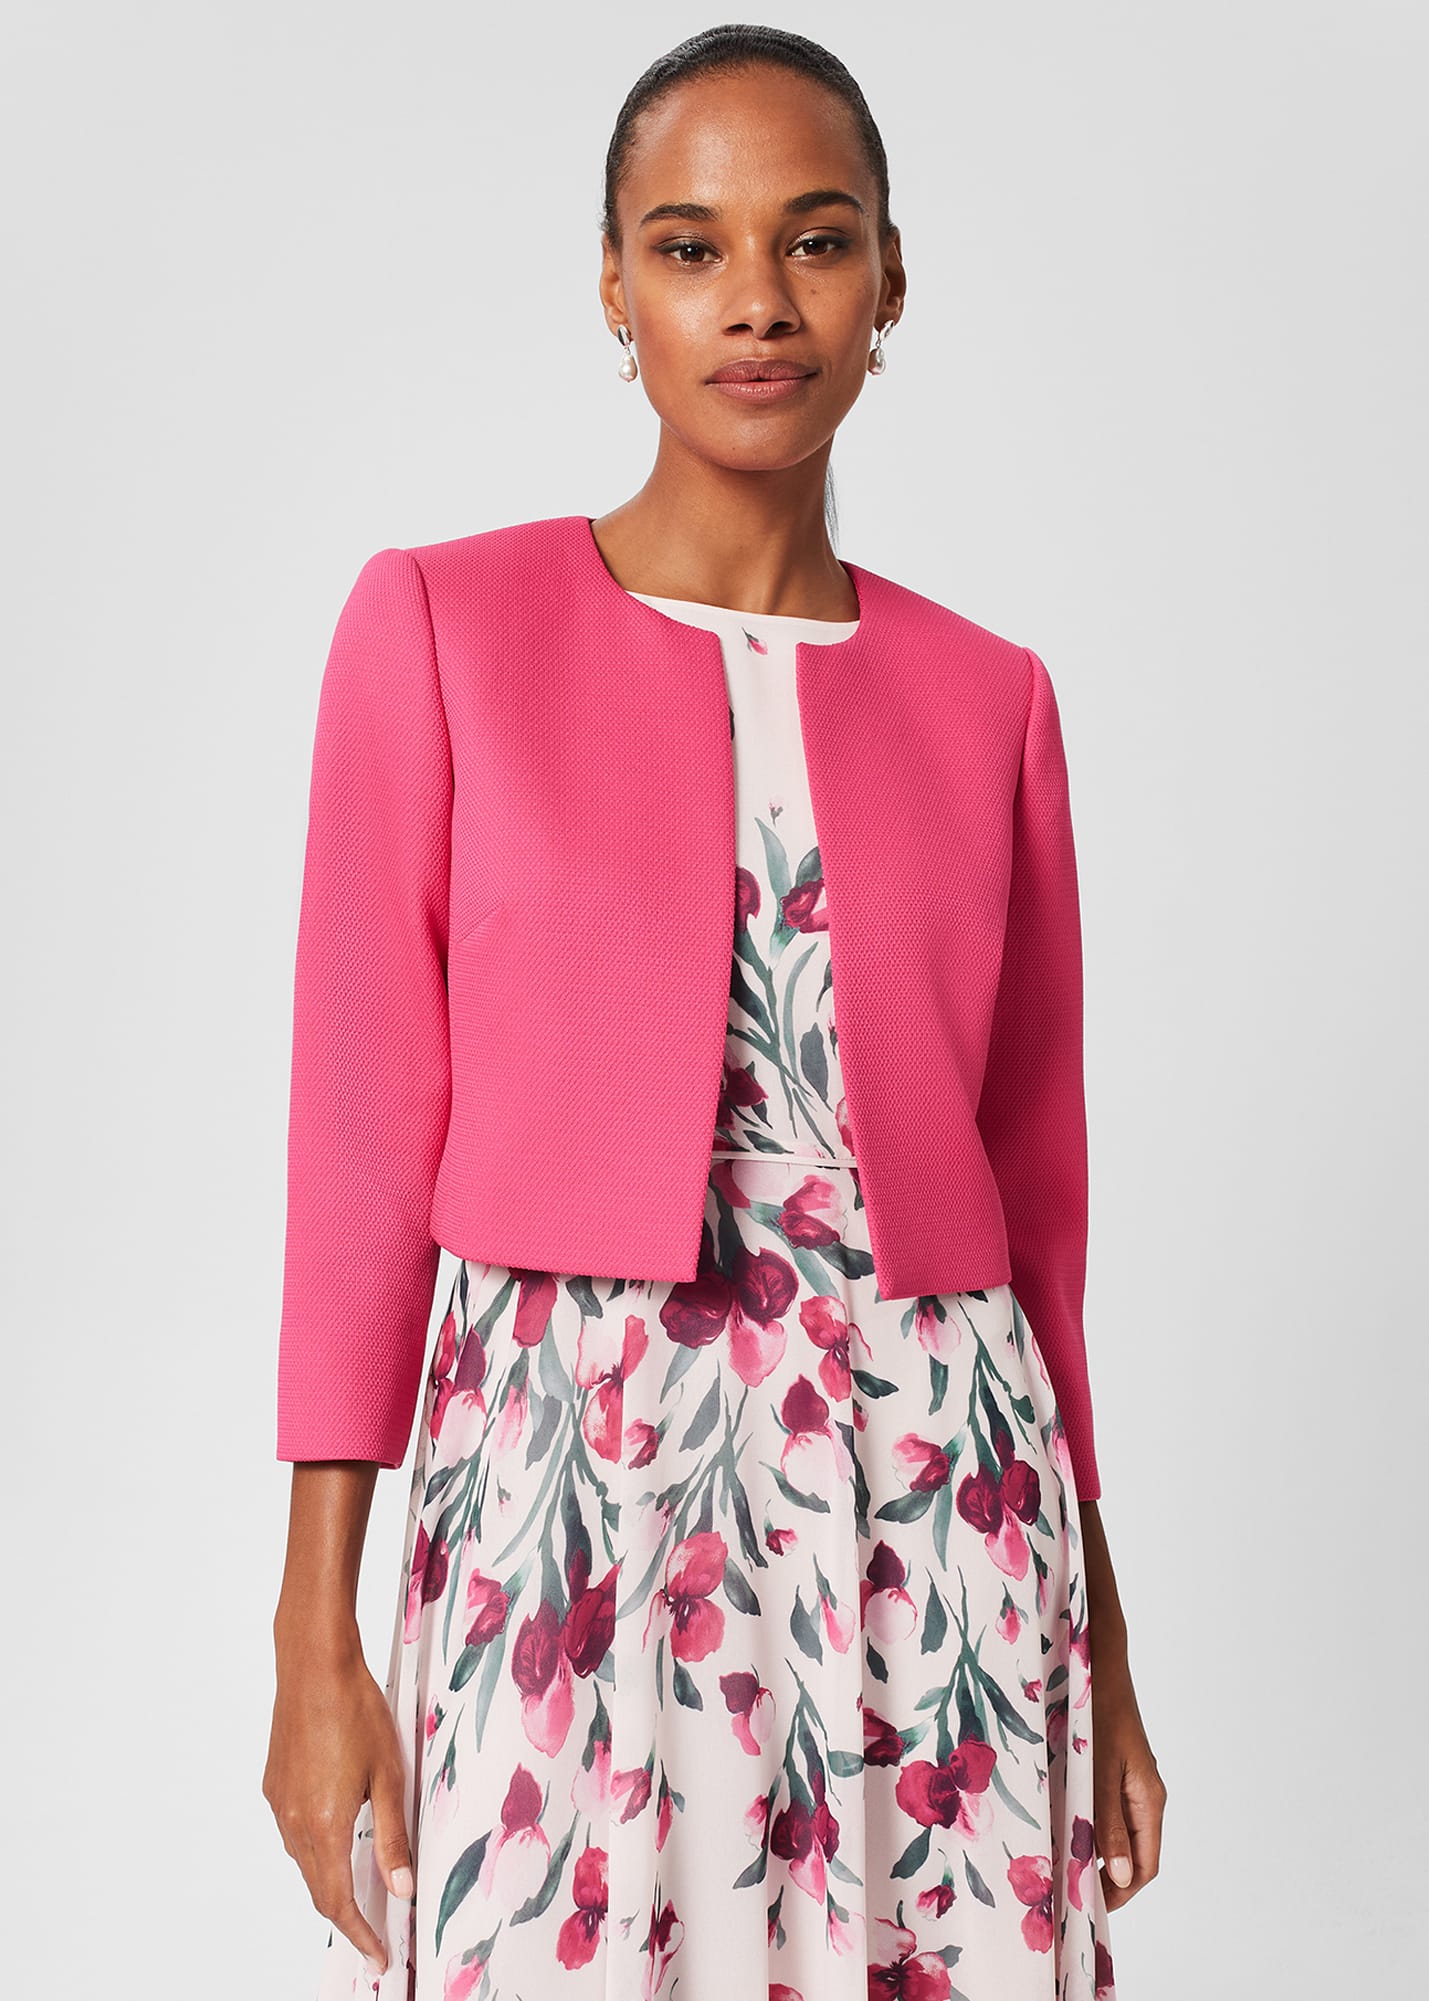 Hobbs Women's Elize Jacket - Bright Pink